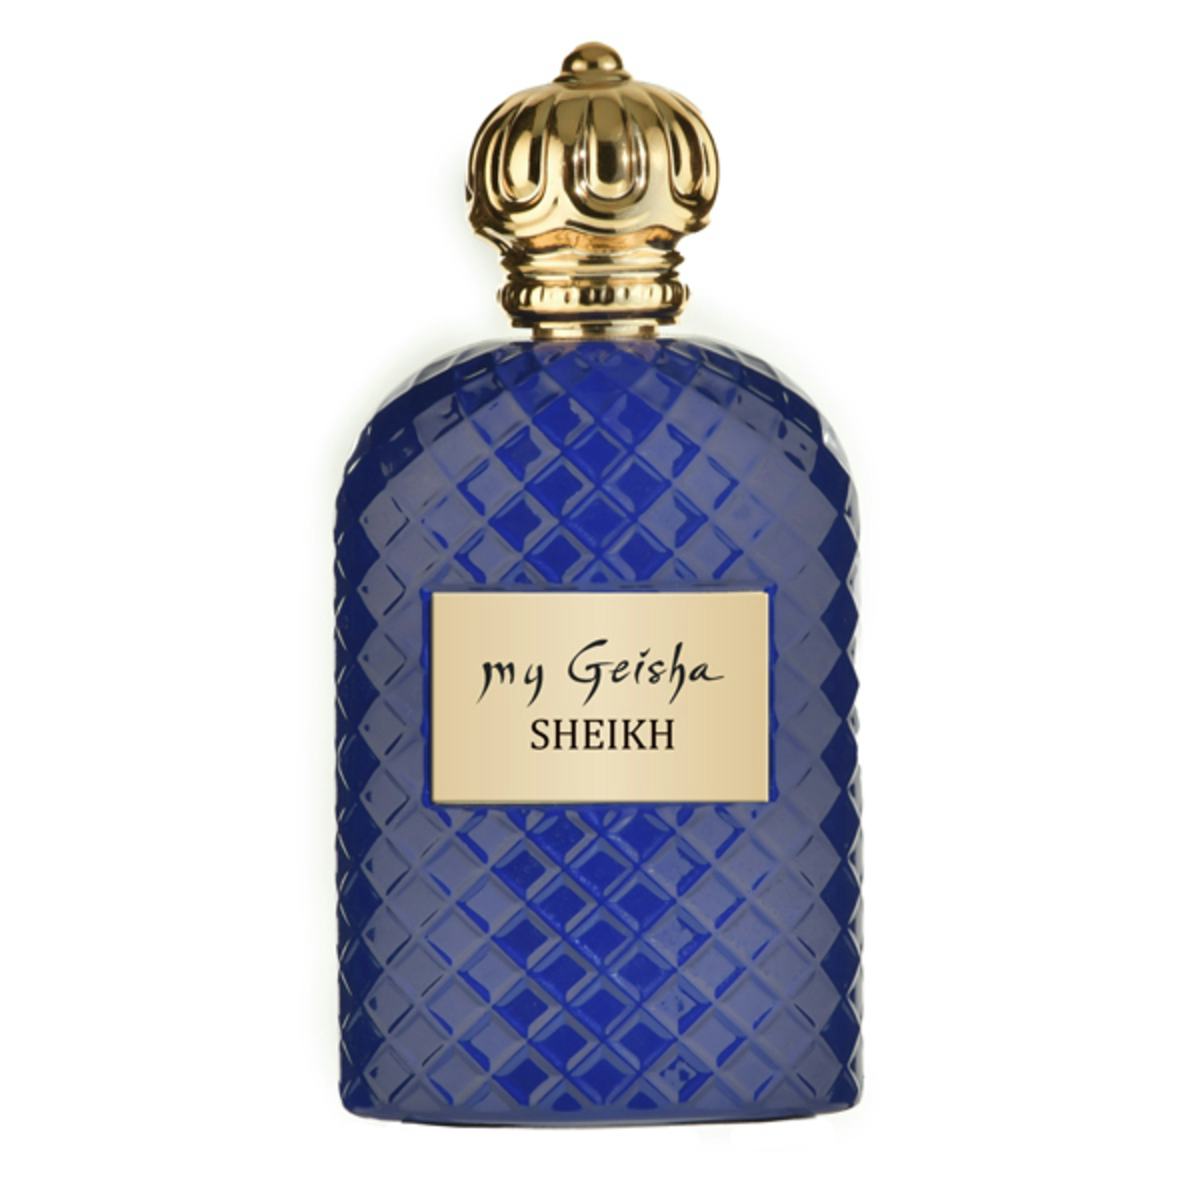 Extrait de parfum SHEIKH 100 ml, artisanal product for direct sale in Switzerland